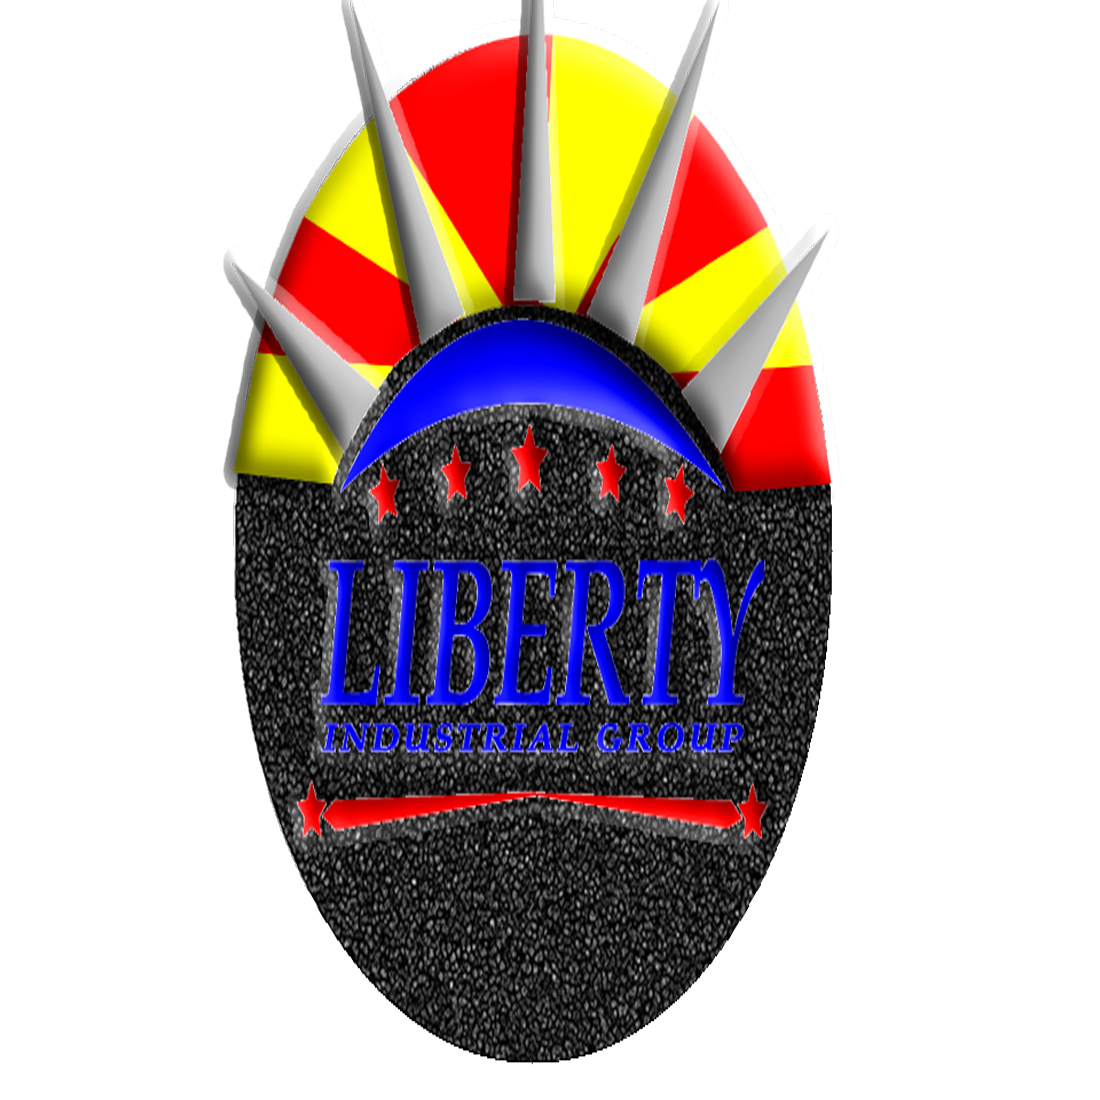 3D Industrial Emblem - Logo preview image.